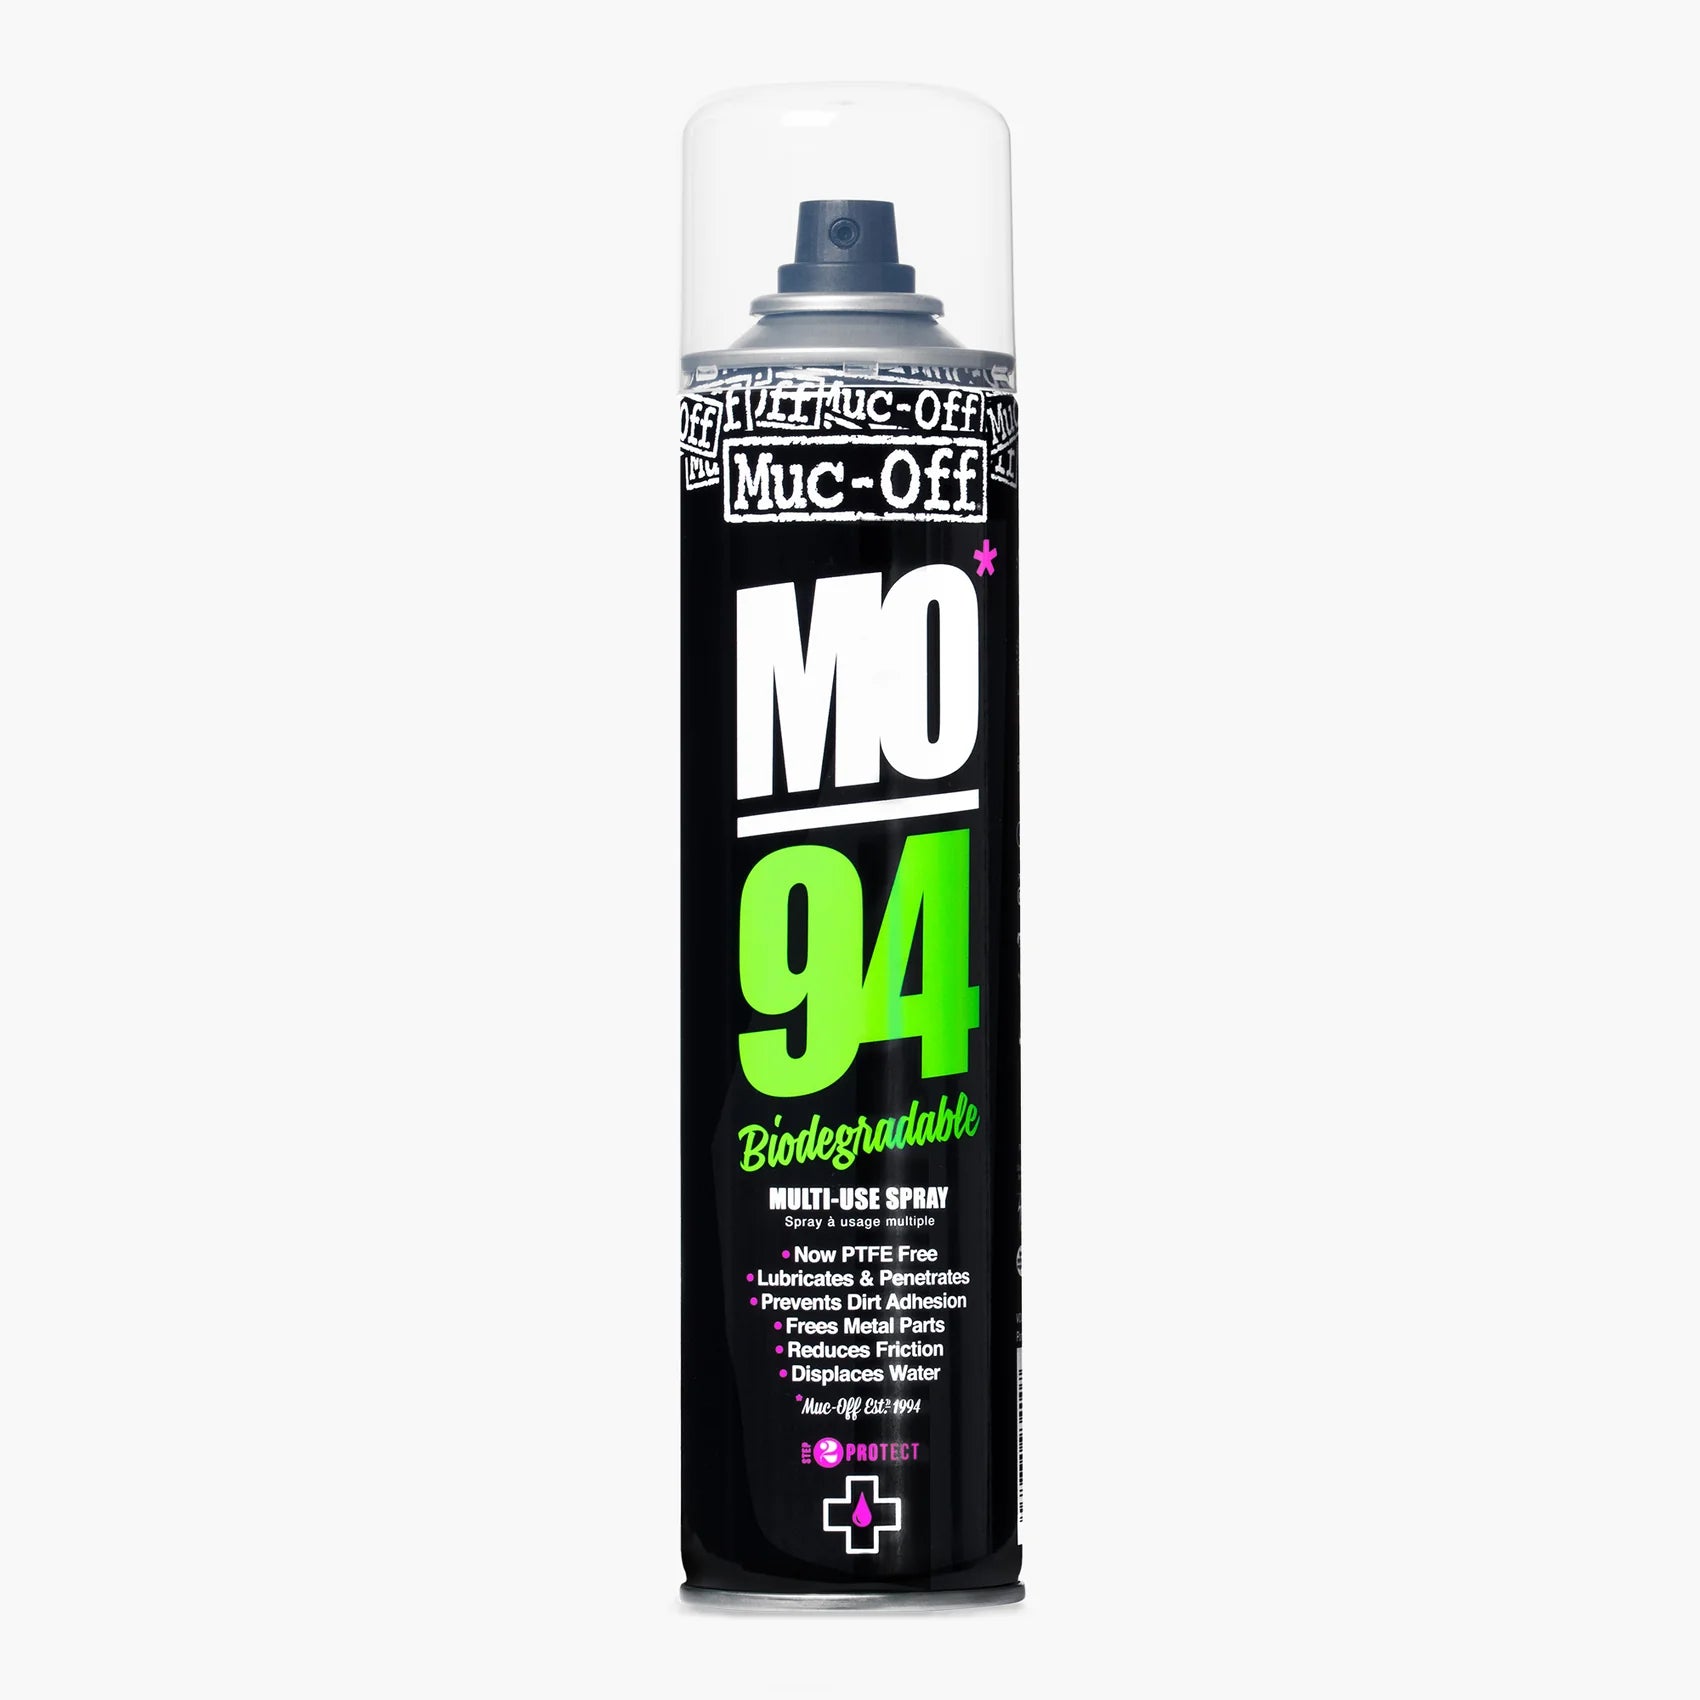 Muc-Off MO-94 400ml multi-purpose spray can on white background